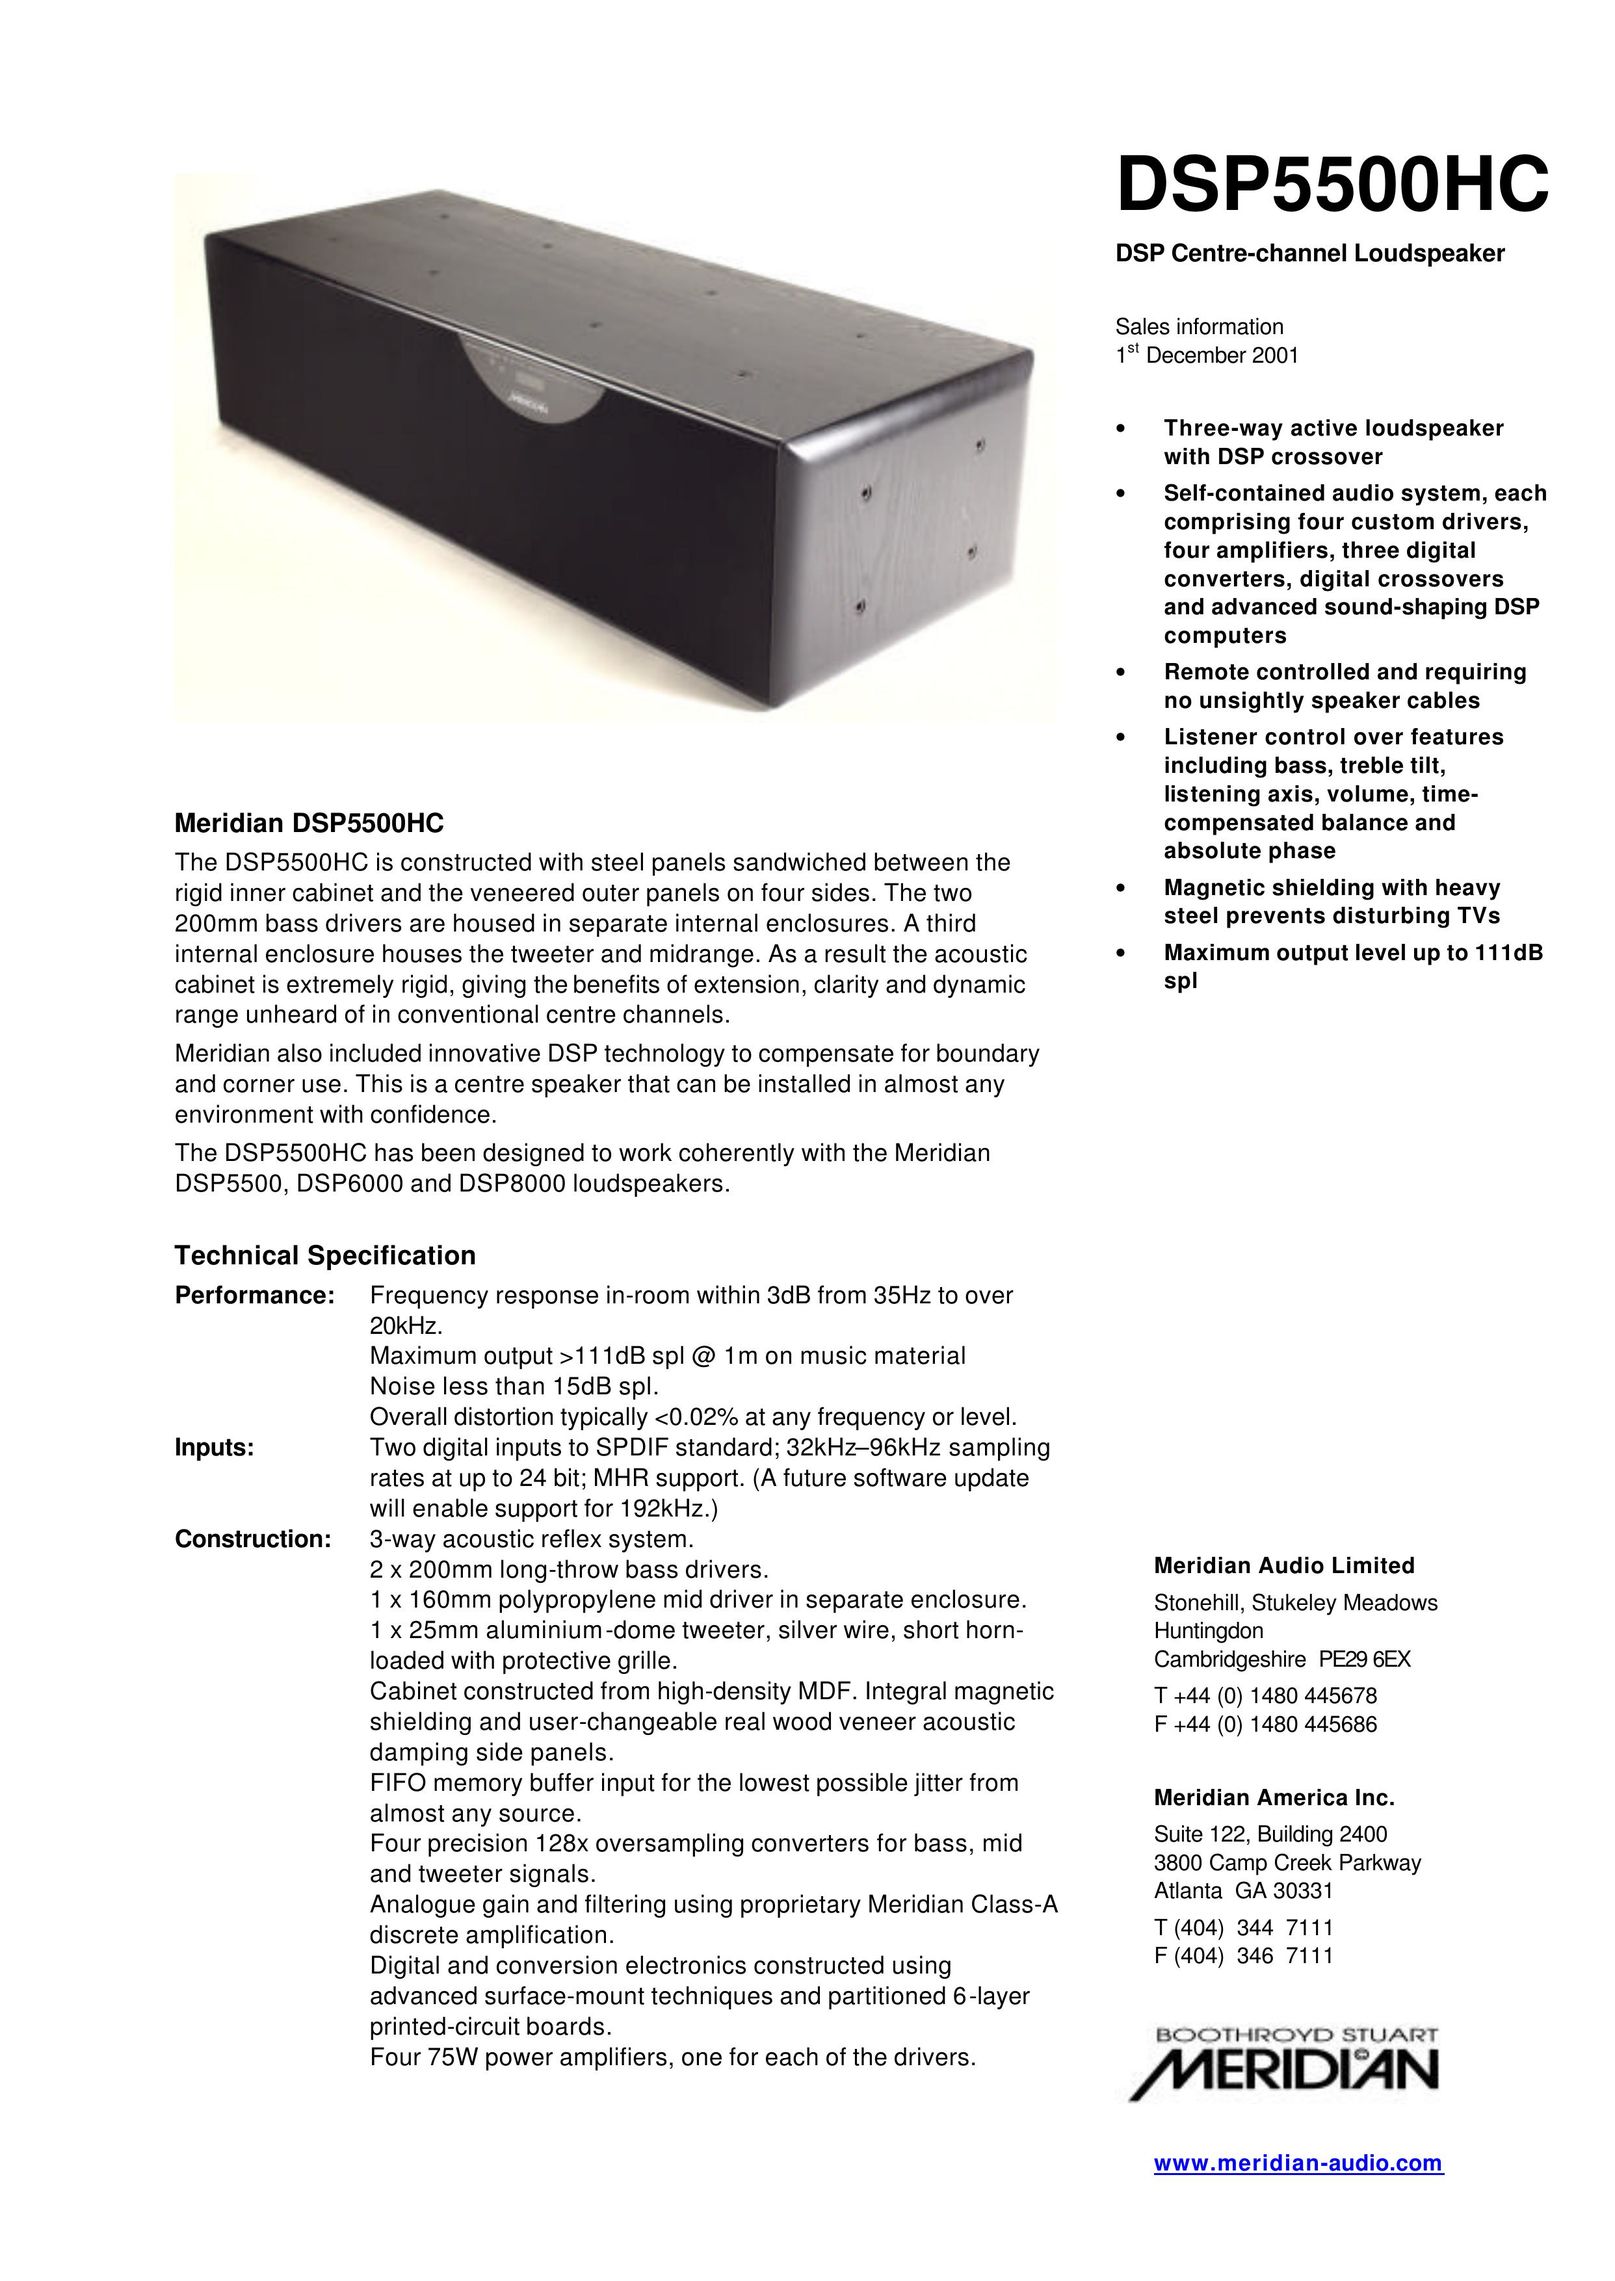 Meridian America DSP5500HC Portable Speaker User Manual